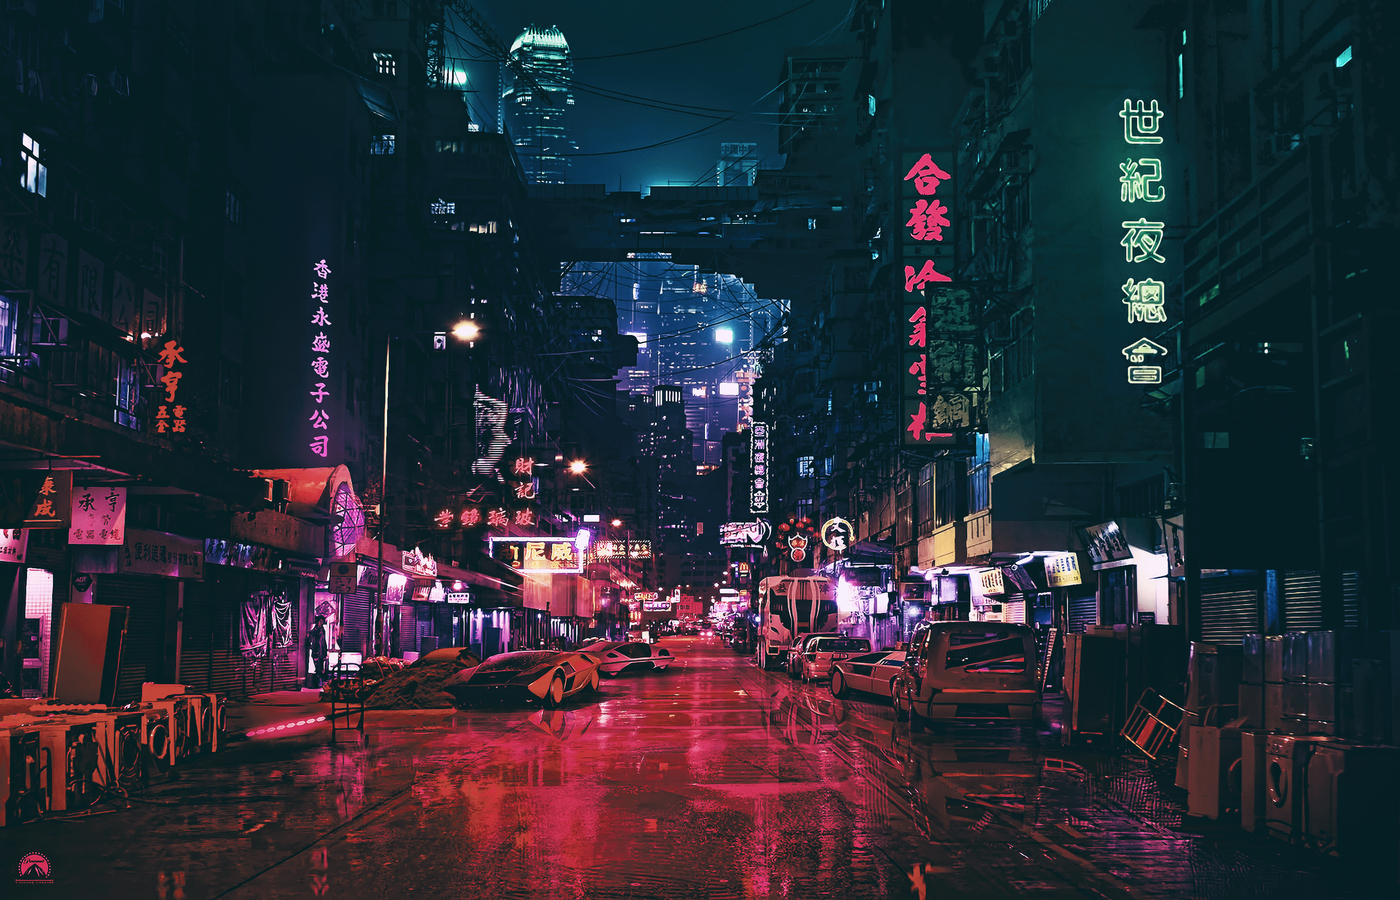 cyberpunk-futuristic-city-science-fiction-concept-art-4k-nn.jpg